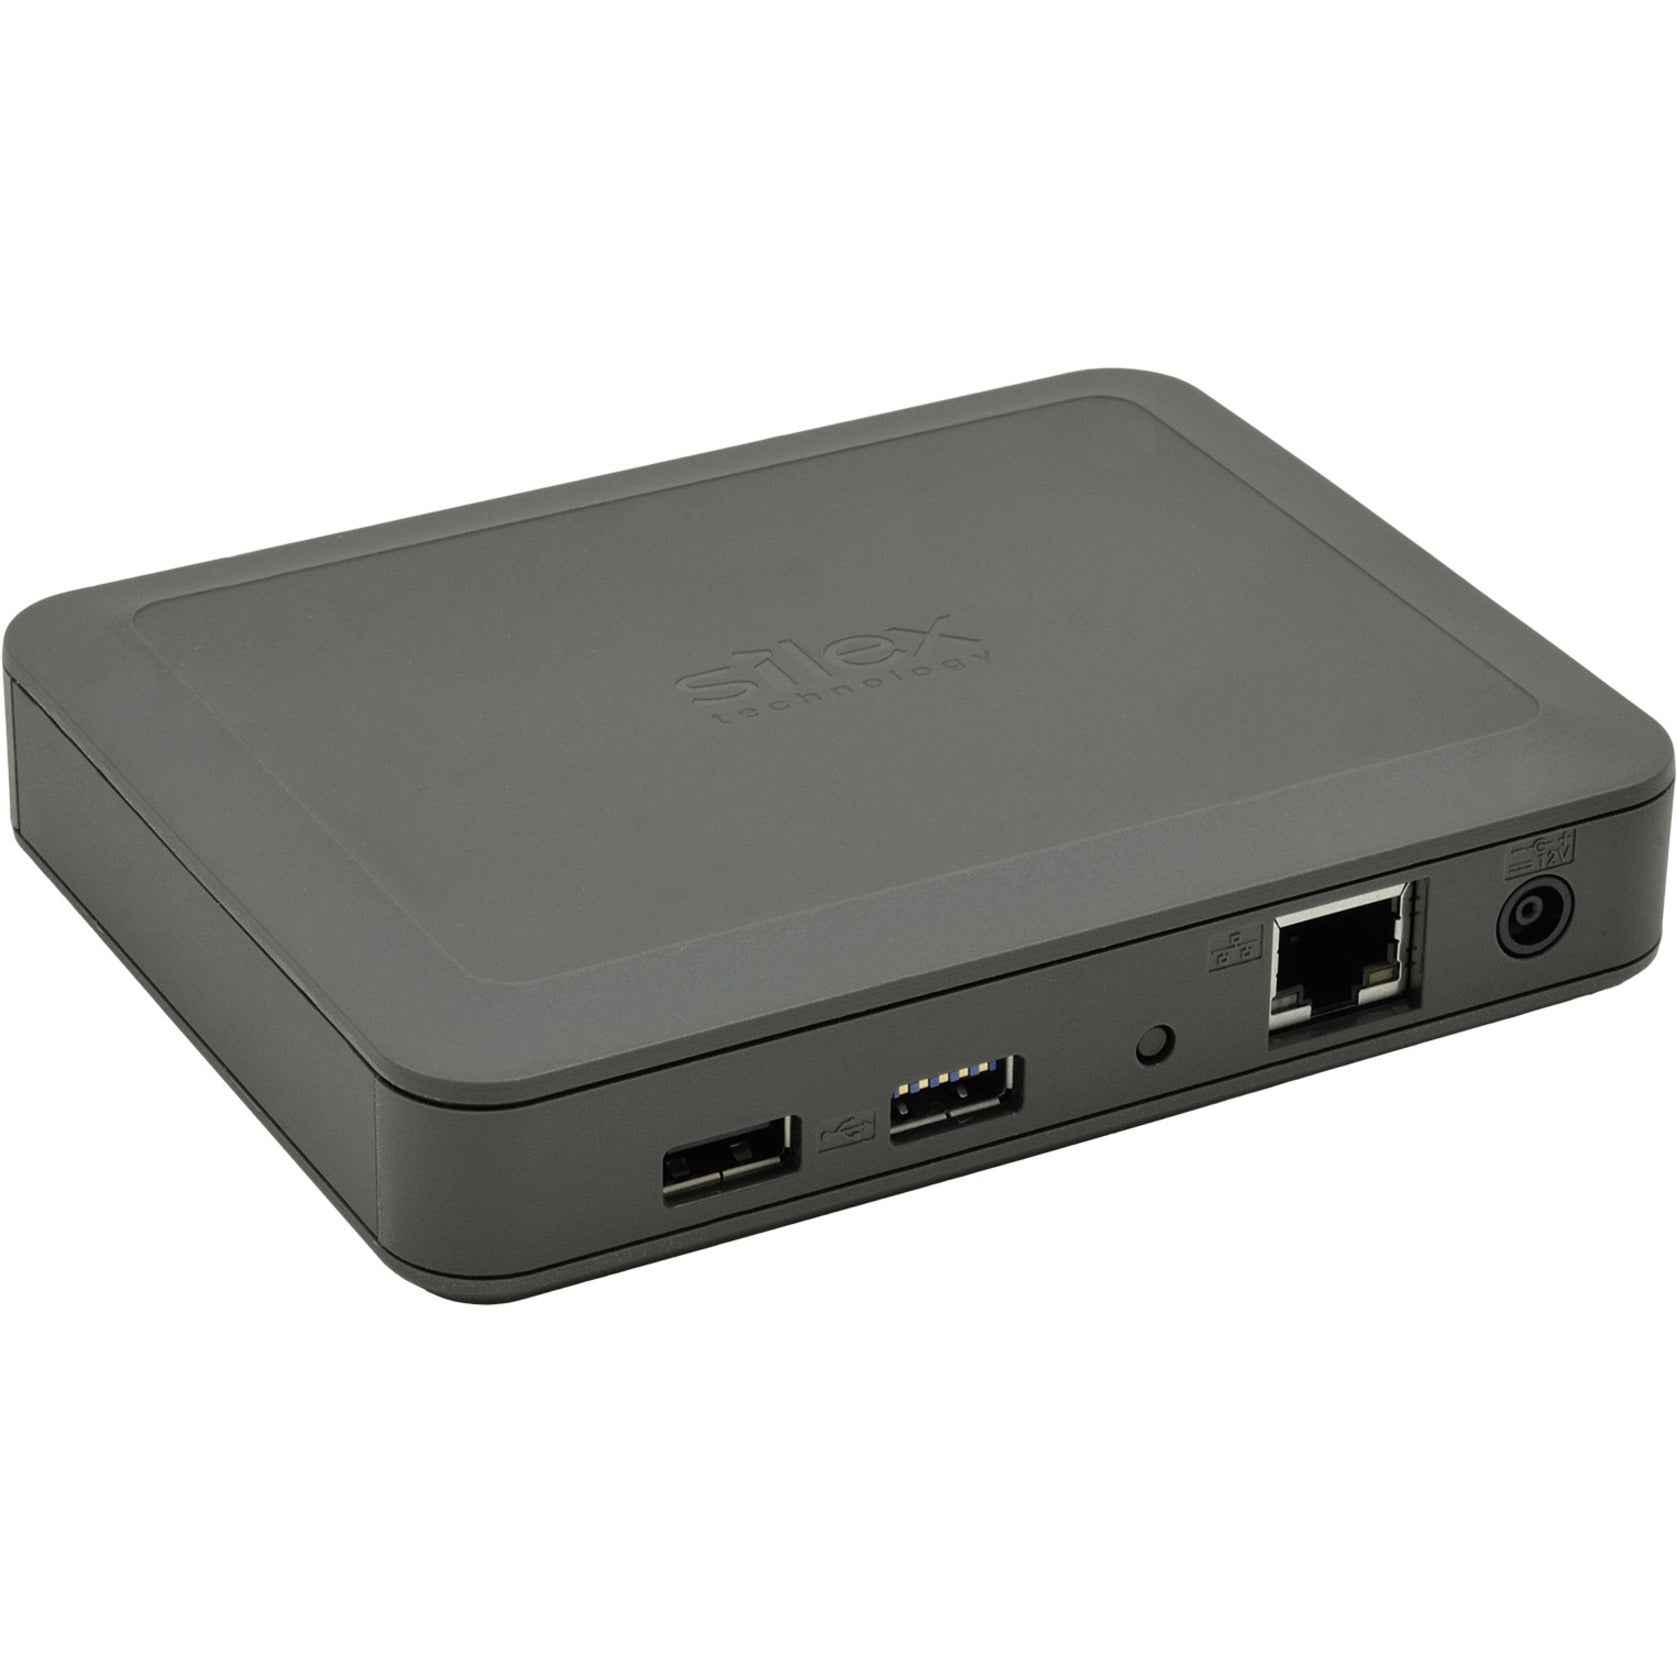 Silex DS-600-US Gigabit USB 3.0 High Throughput Device Server, 2 Year Warranty, RoHS Certified